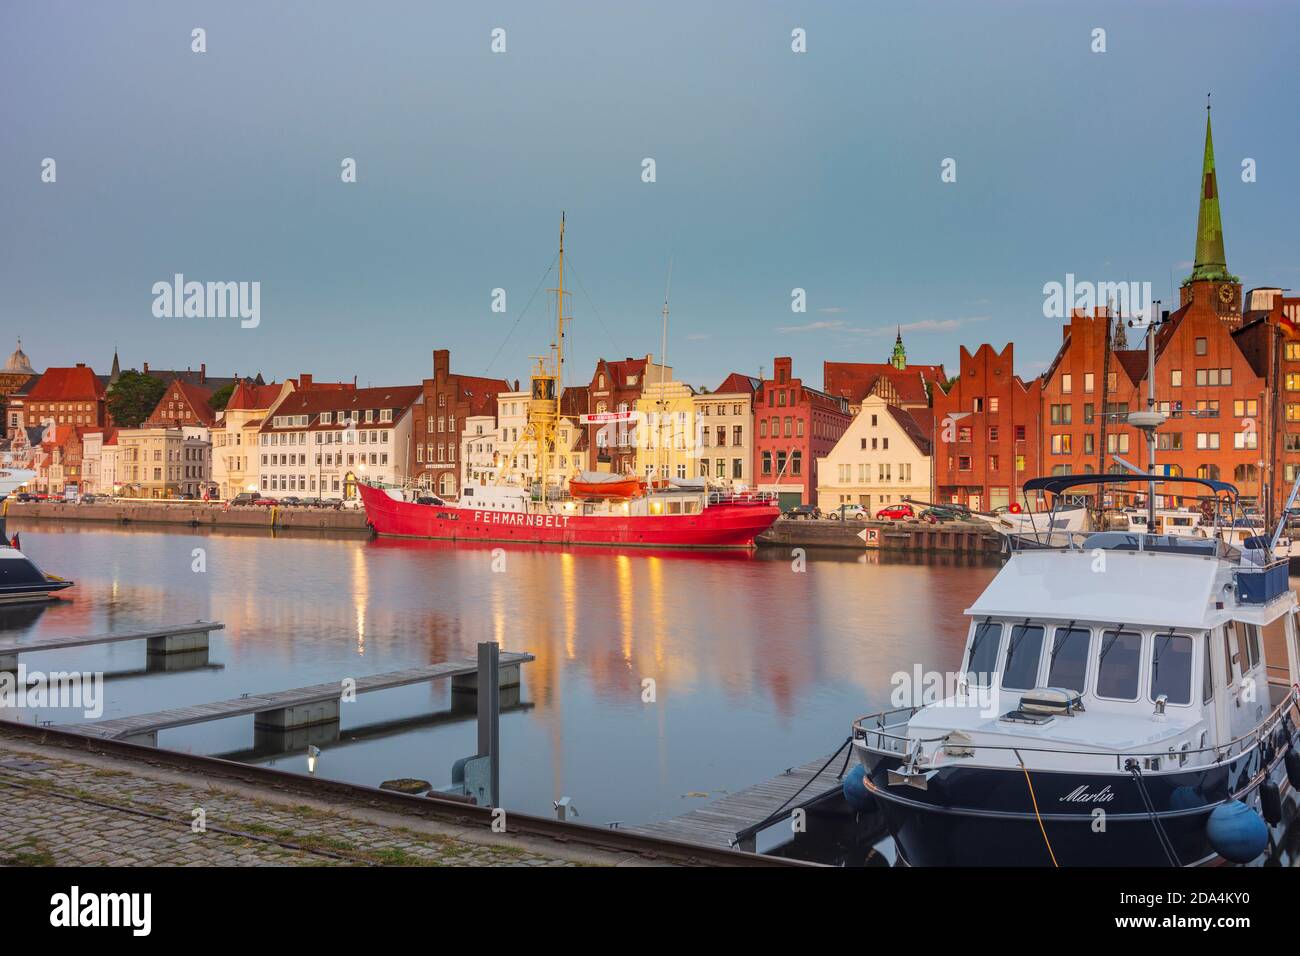 Lübeck: fiume Untertrave, nave museo Feuerschiff (Lightship) Fehmarnbelt, vista della città vecchia, chiesa Jakobikirche, Ostsee (Mar Baltico), Schleswig-Holst Foto Stock